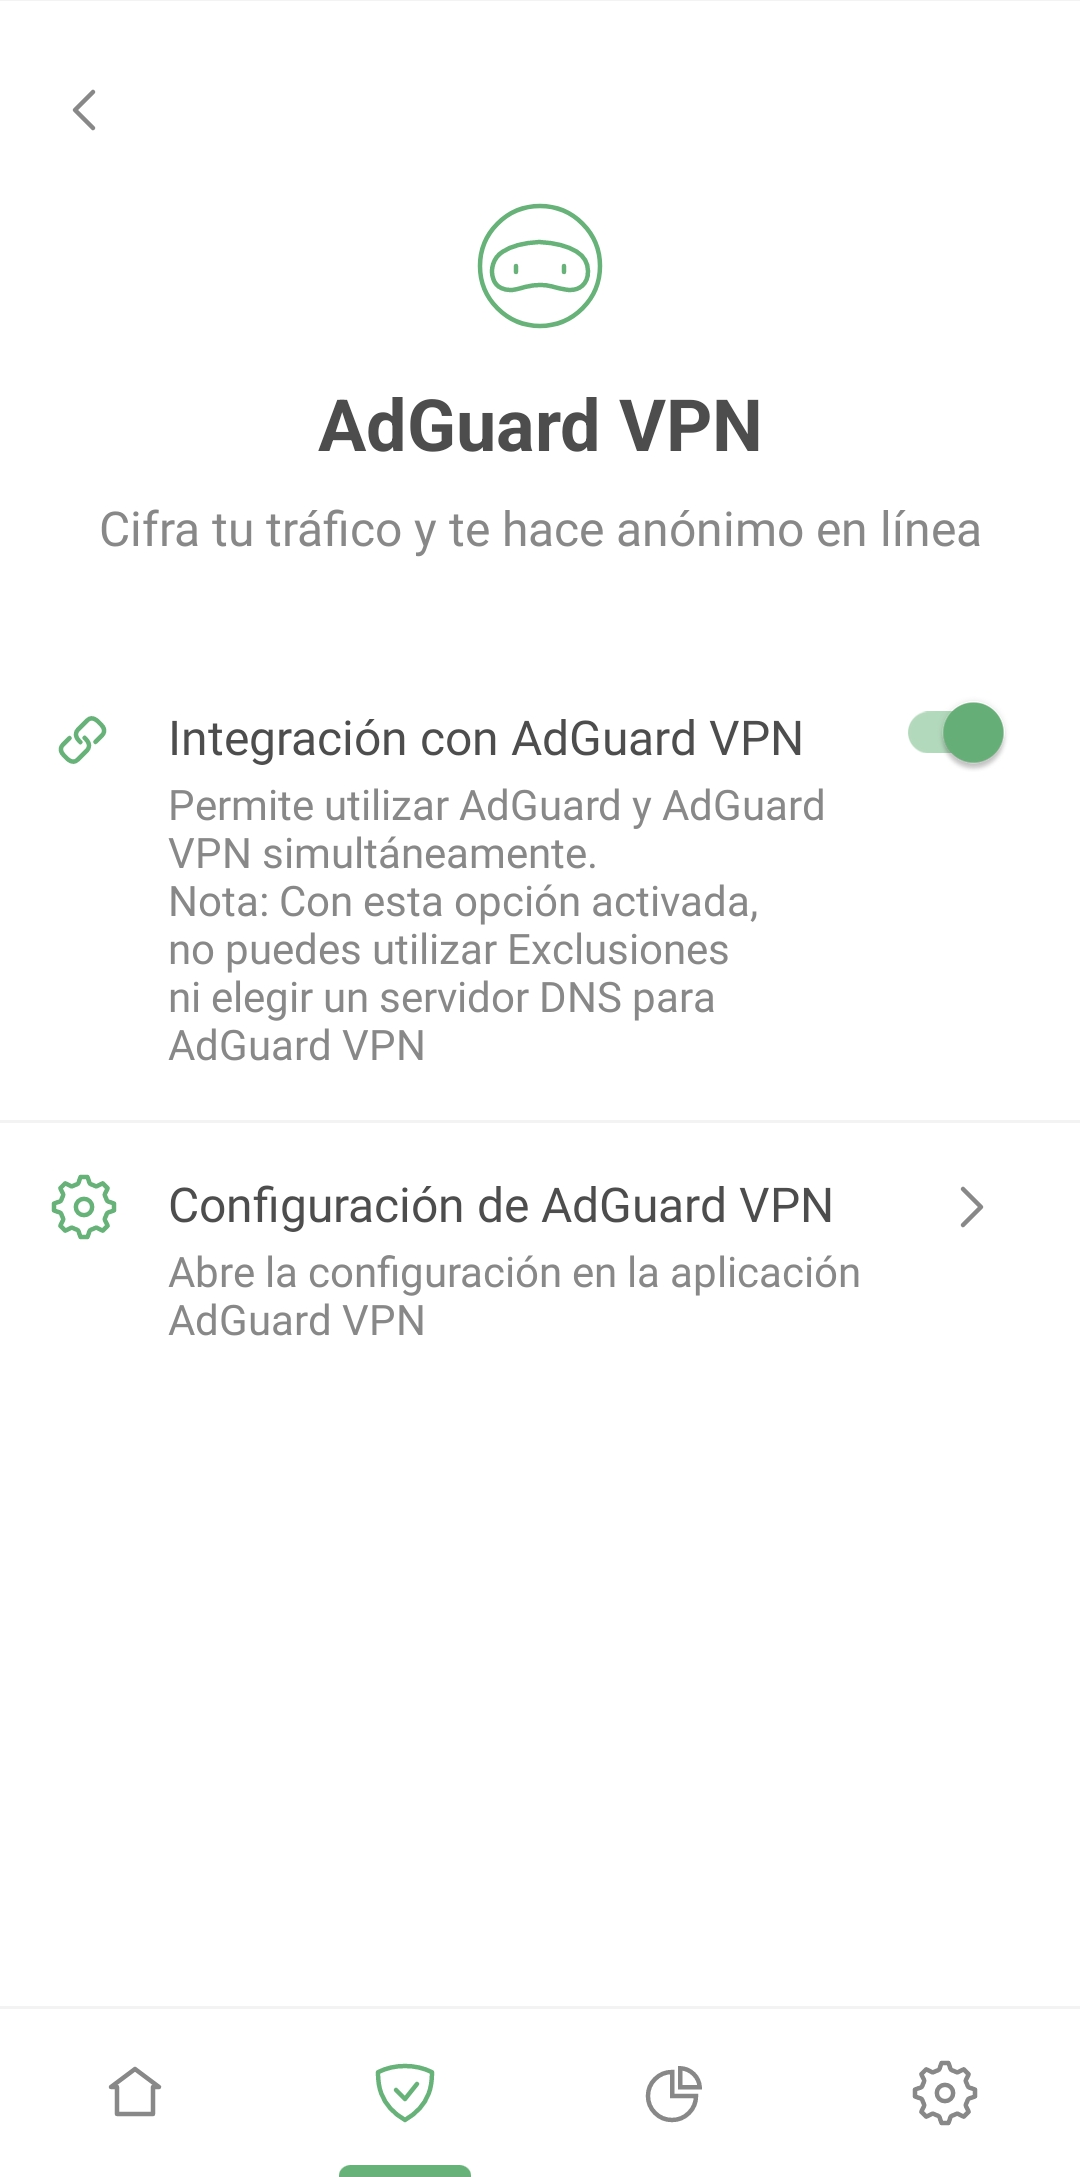 Integración con AdGuard VPN